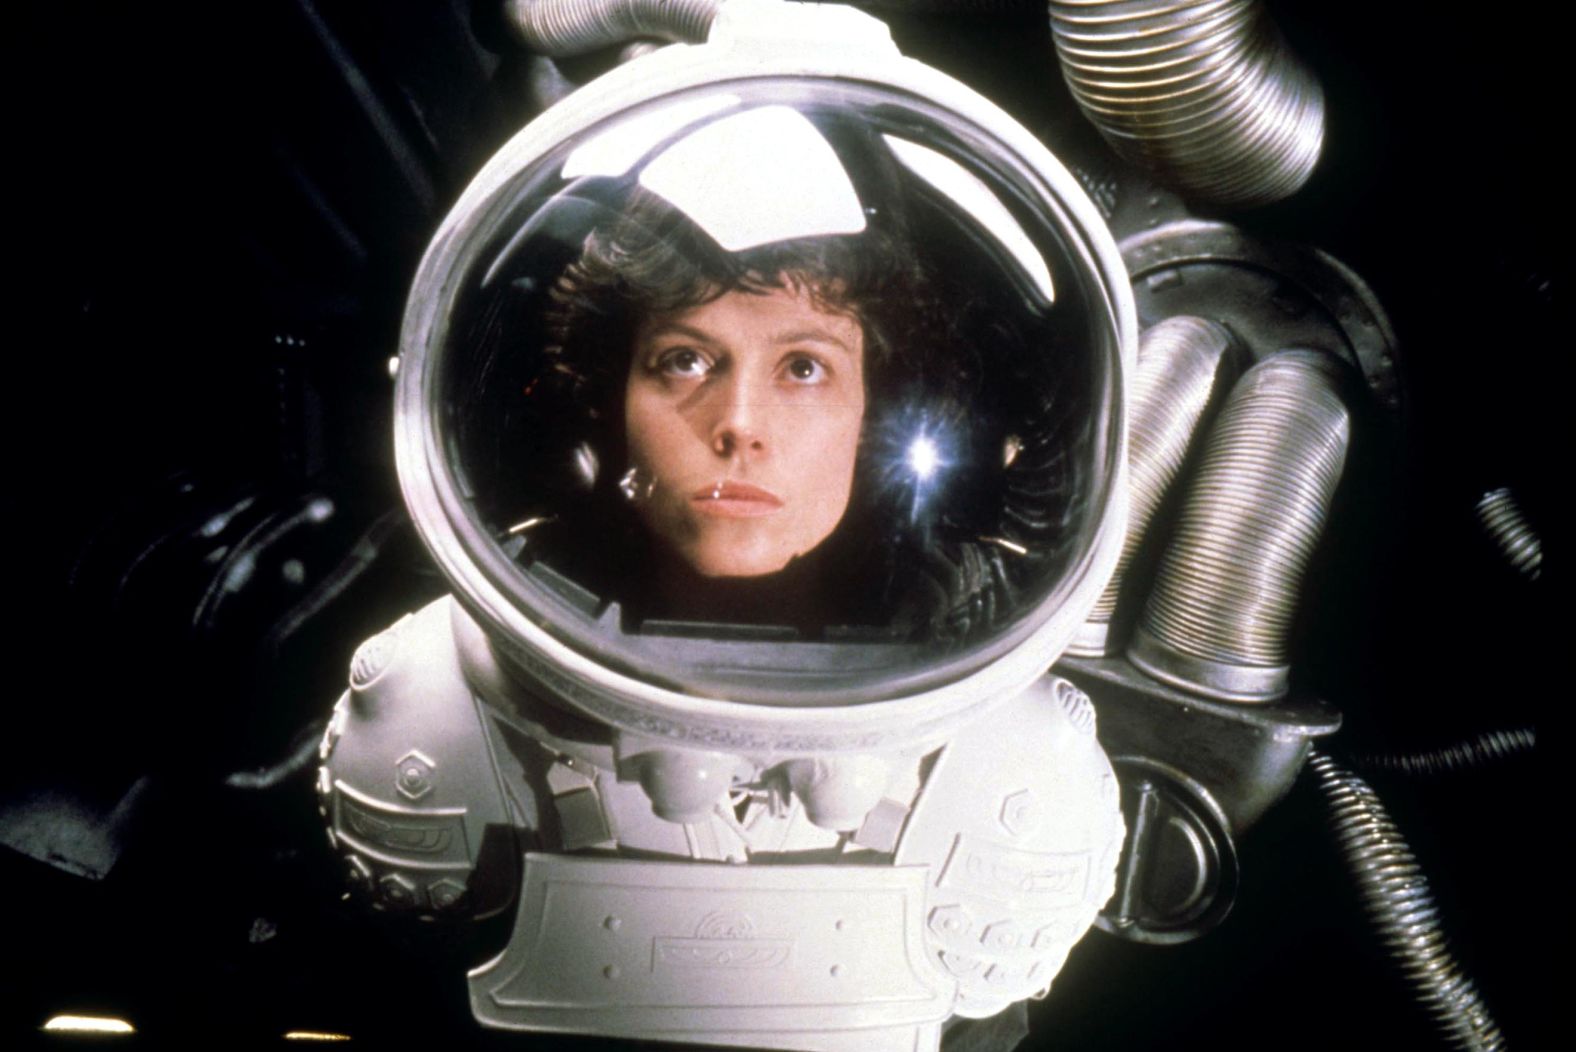 Sigourney Weaver in "Alien" - 1979